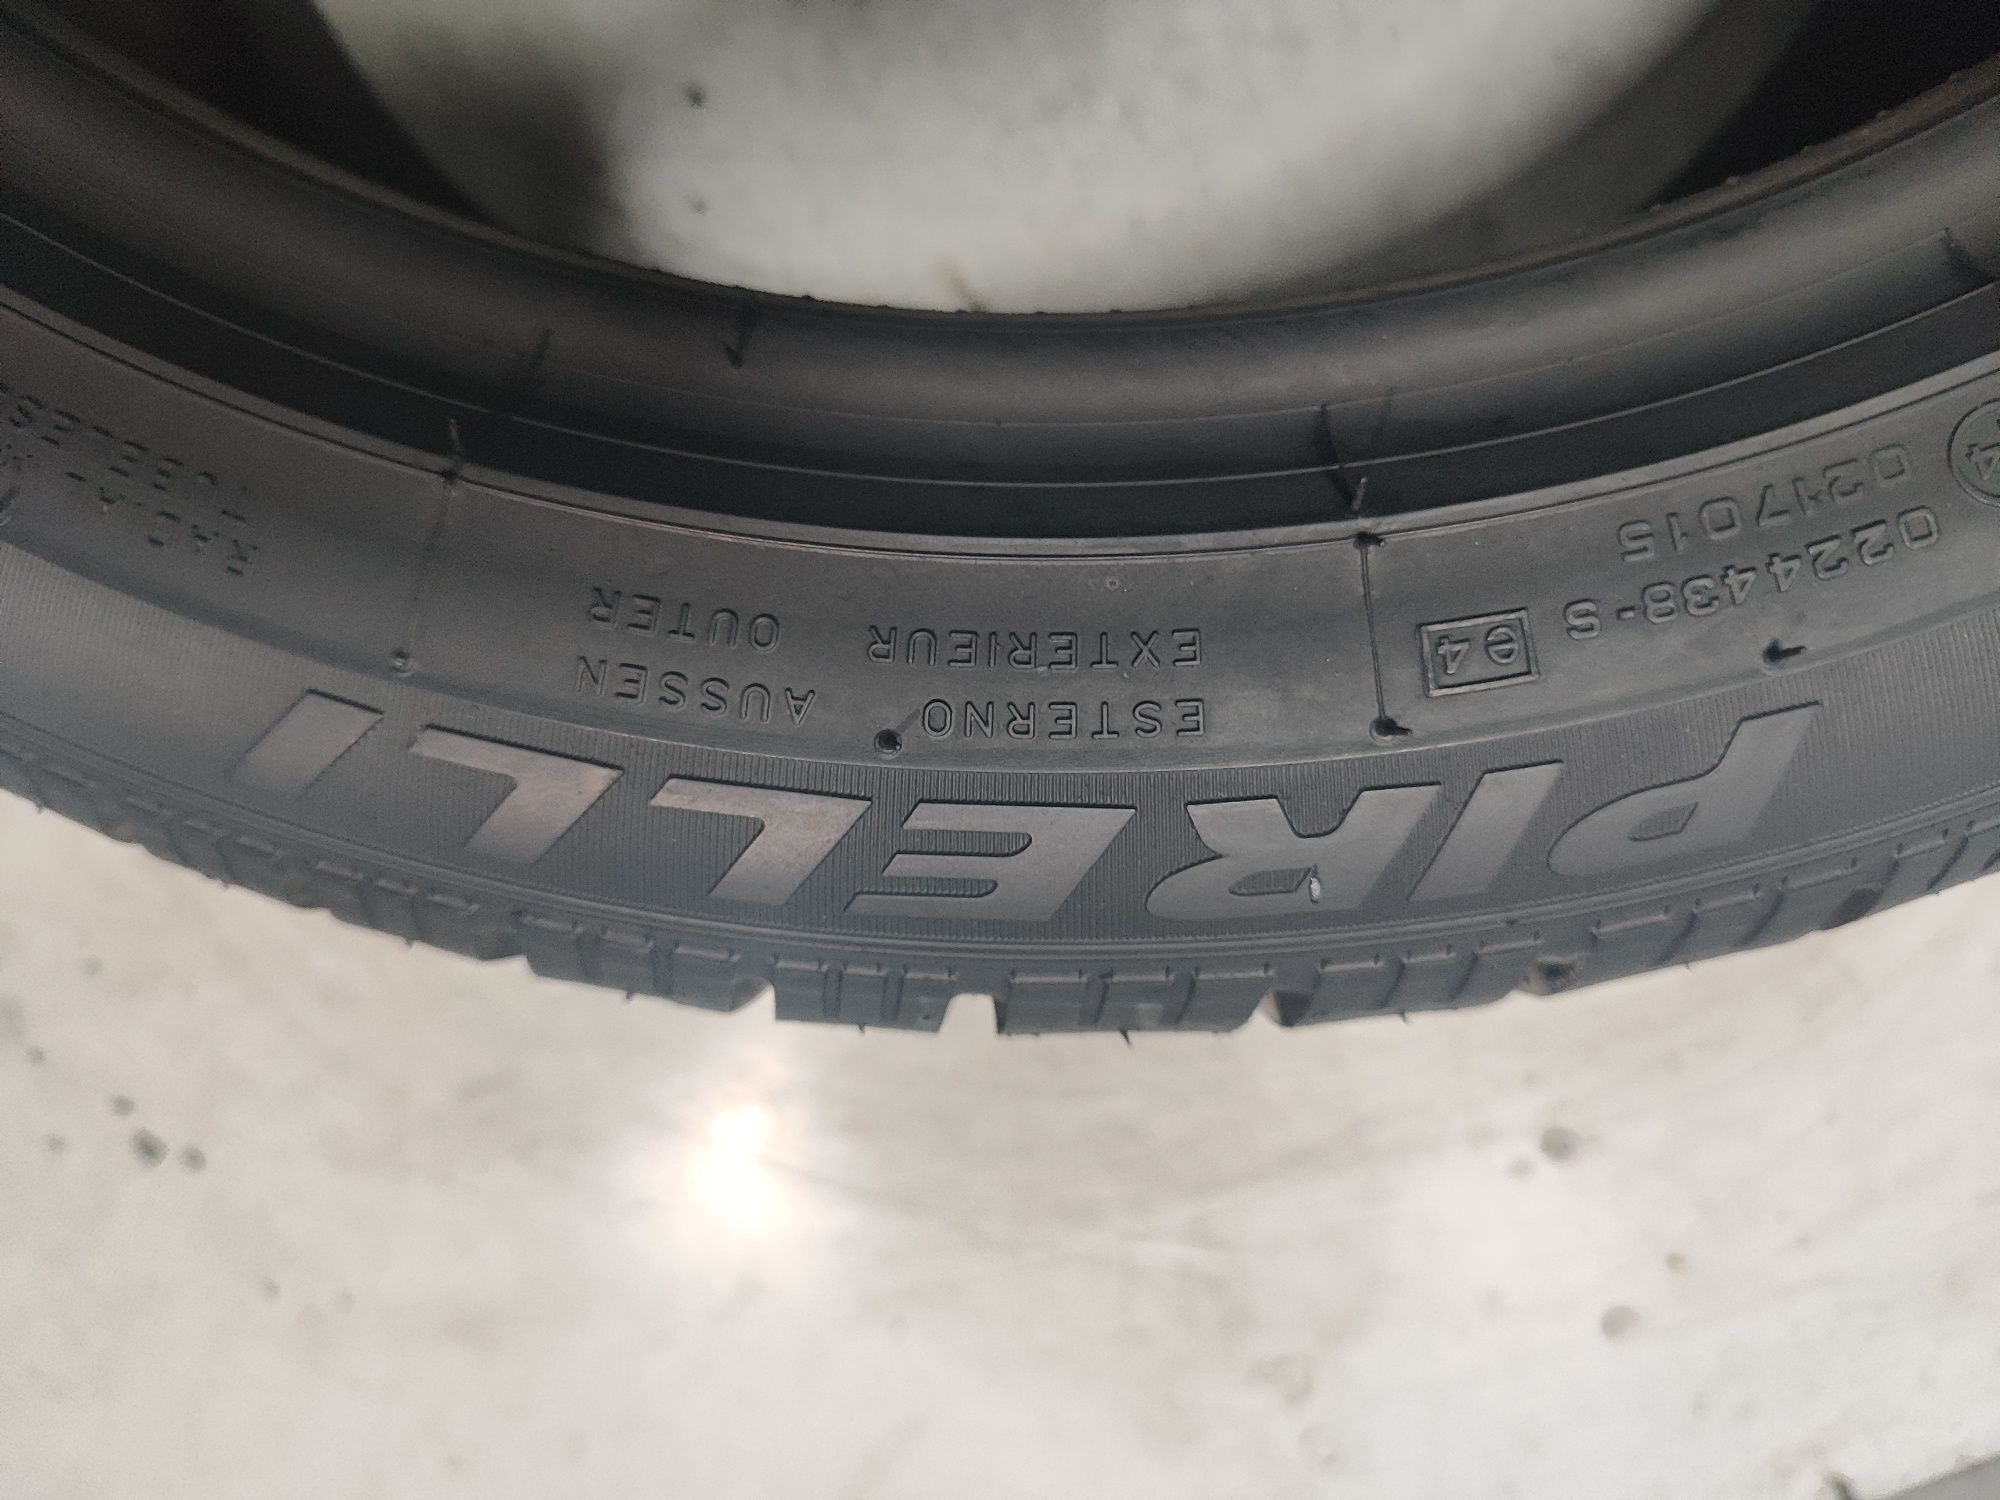 2 pneus semi novos Pirelli 255/40R18 Oferta dos Portes